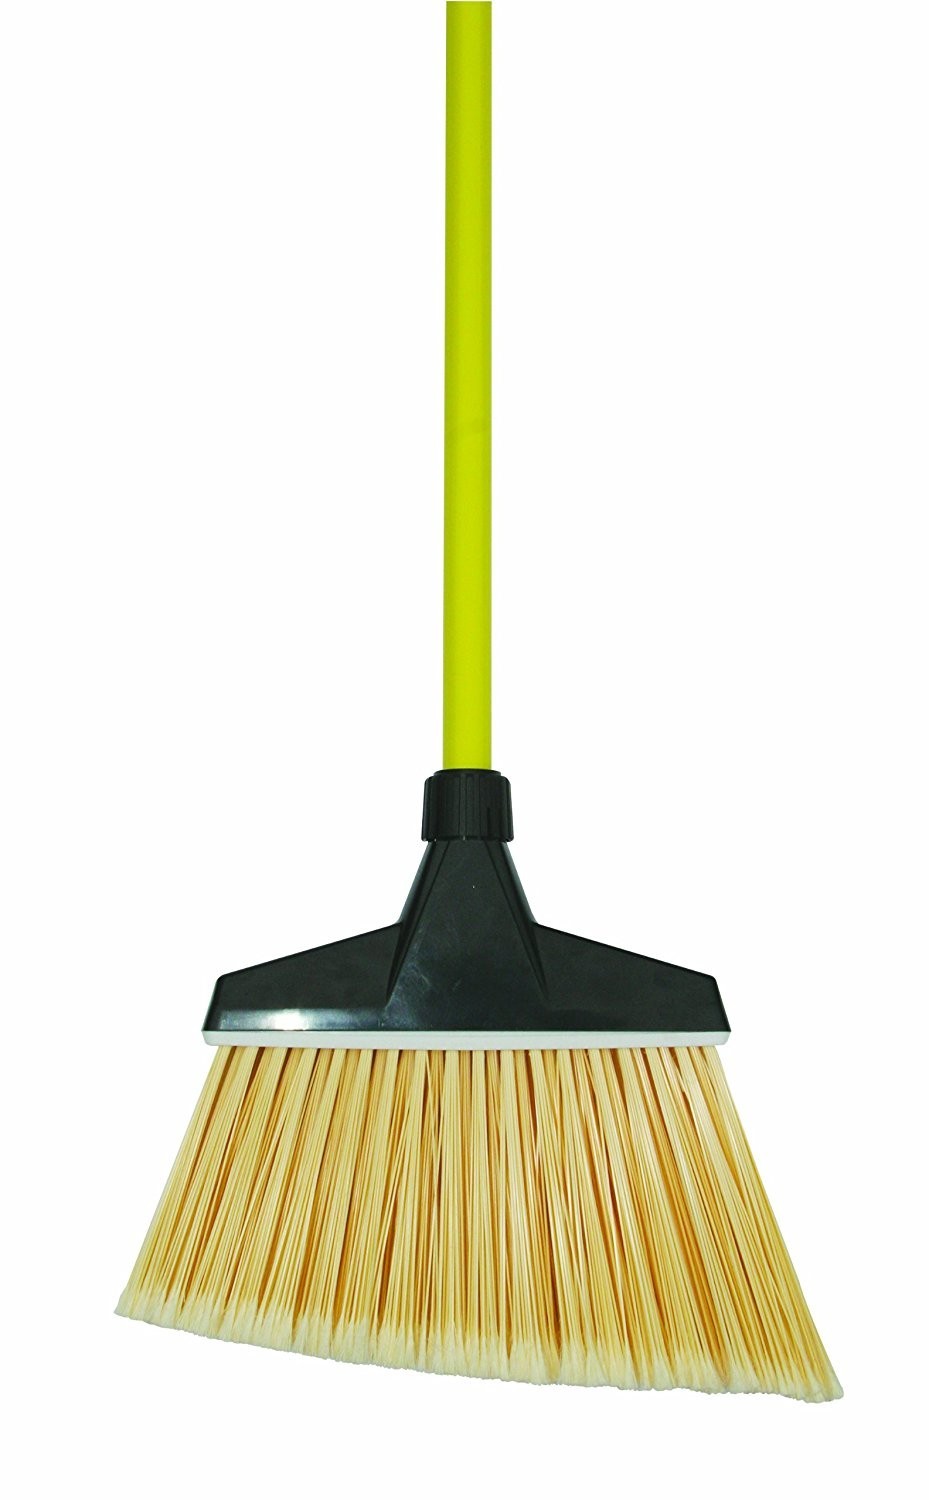 48 Inch Large Angle Broom w/Handle, Flagged Bristles